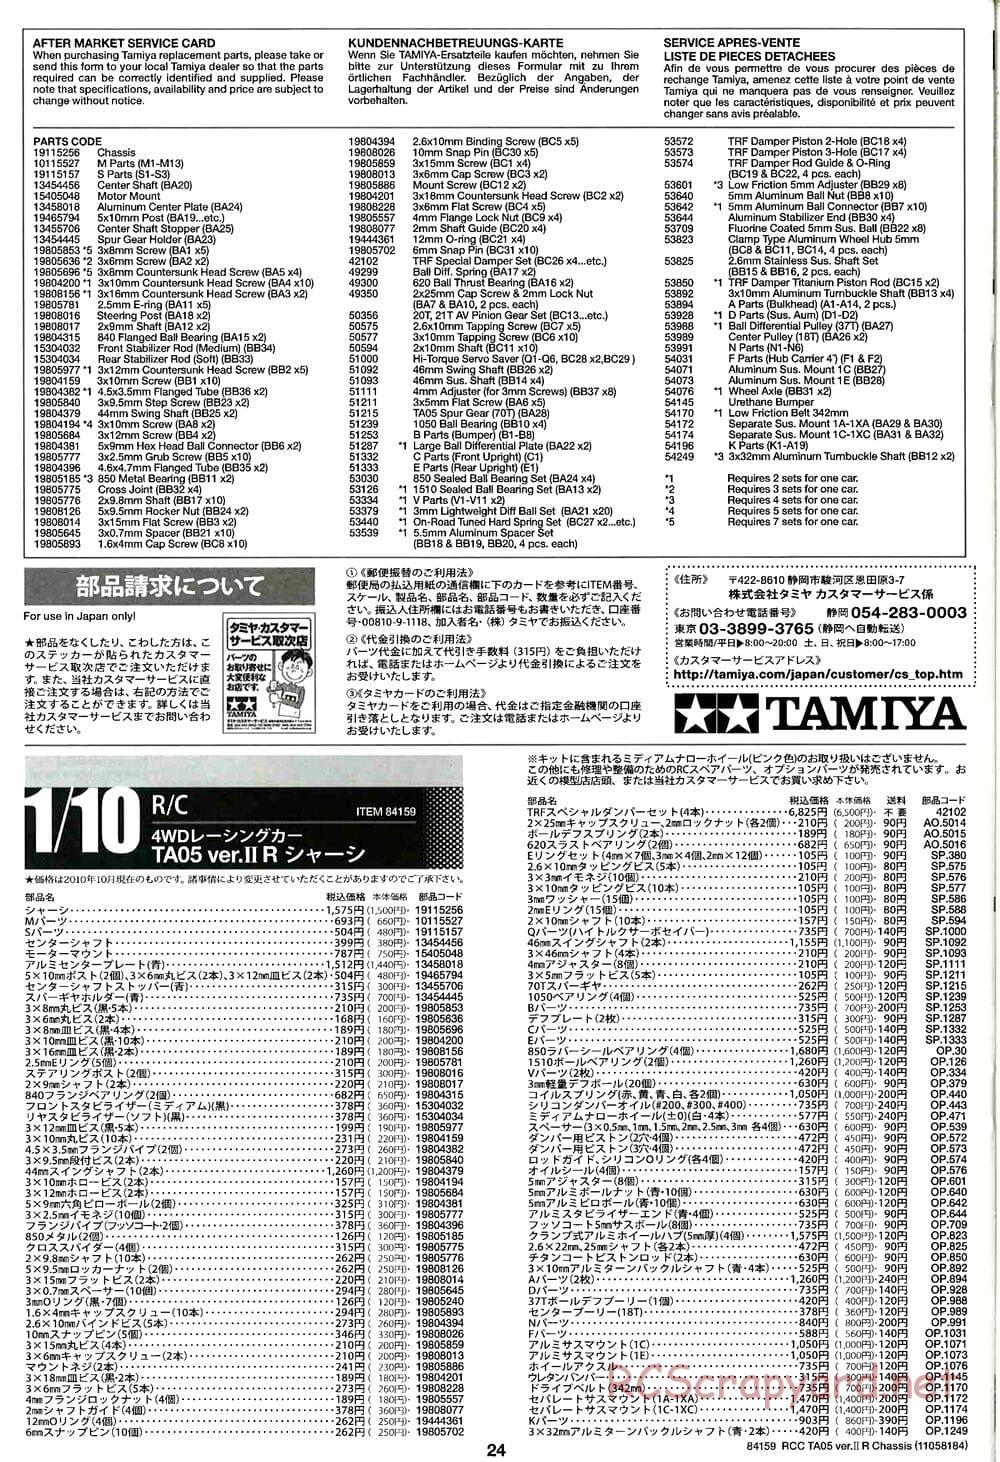 Tamiya - TA05 Ver.II R Chassis - Manual - Page 24